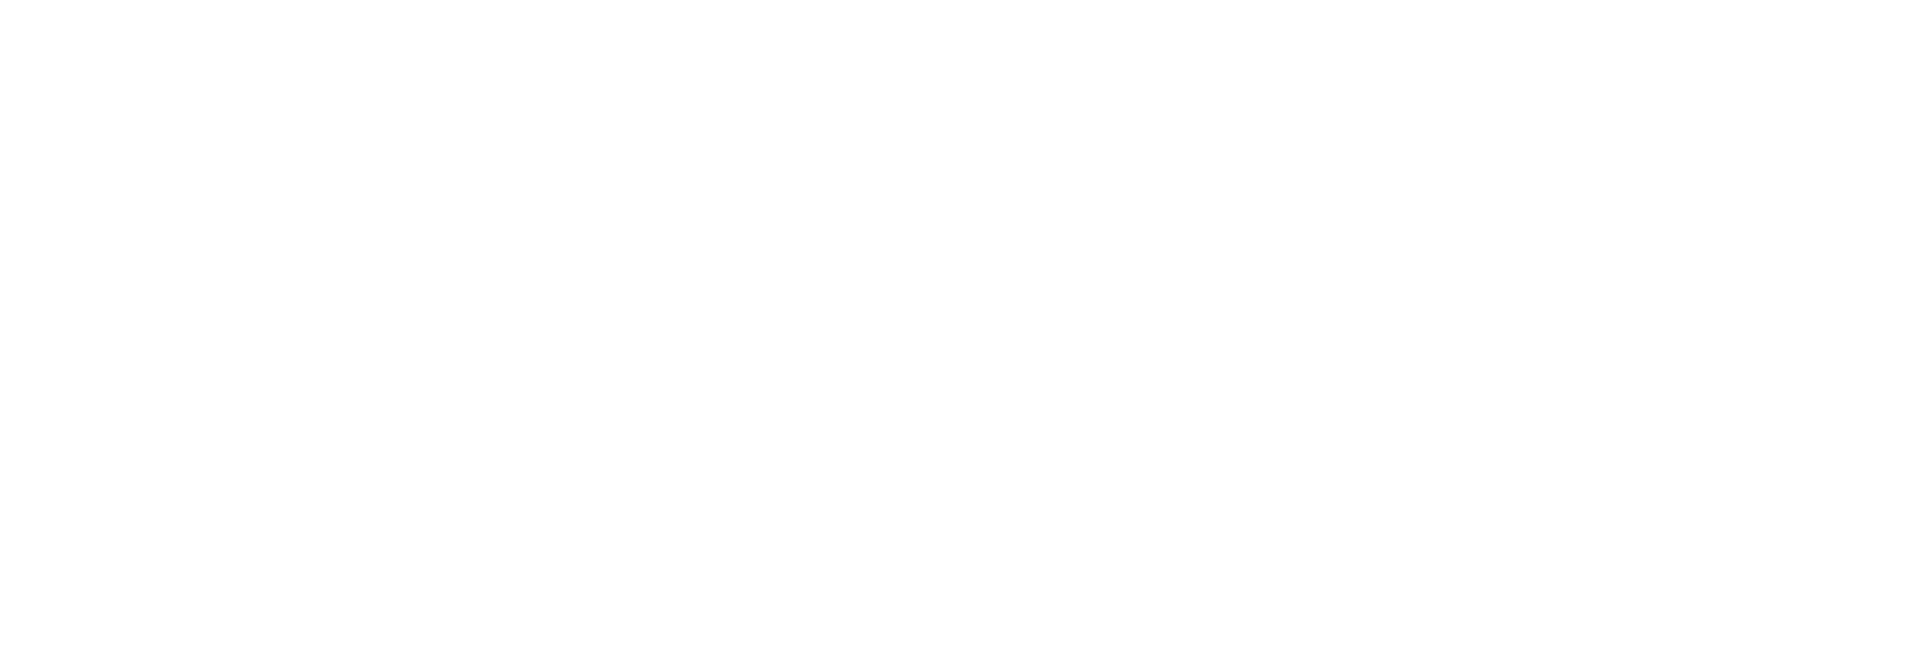 Project Canopy logo